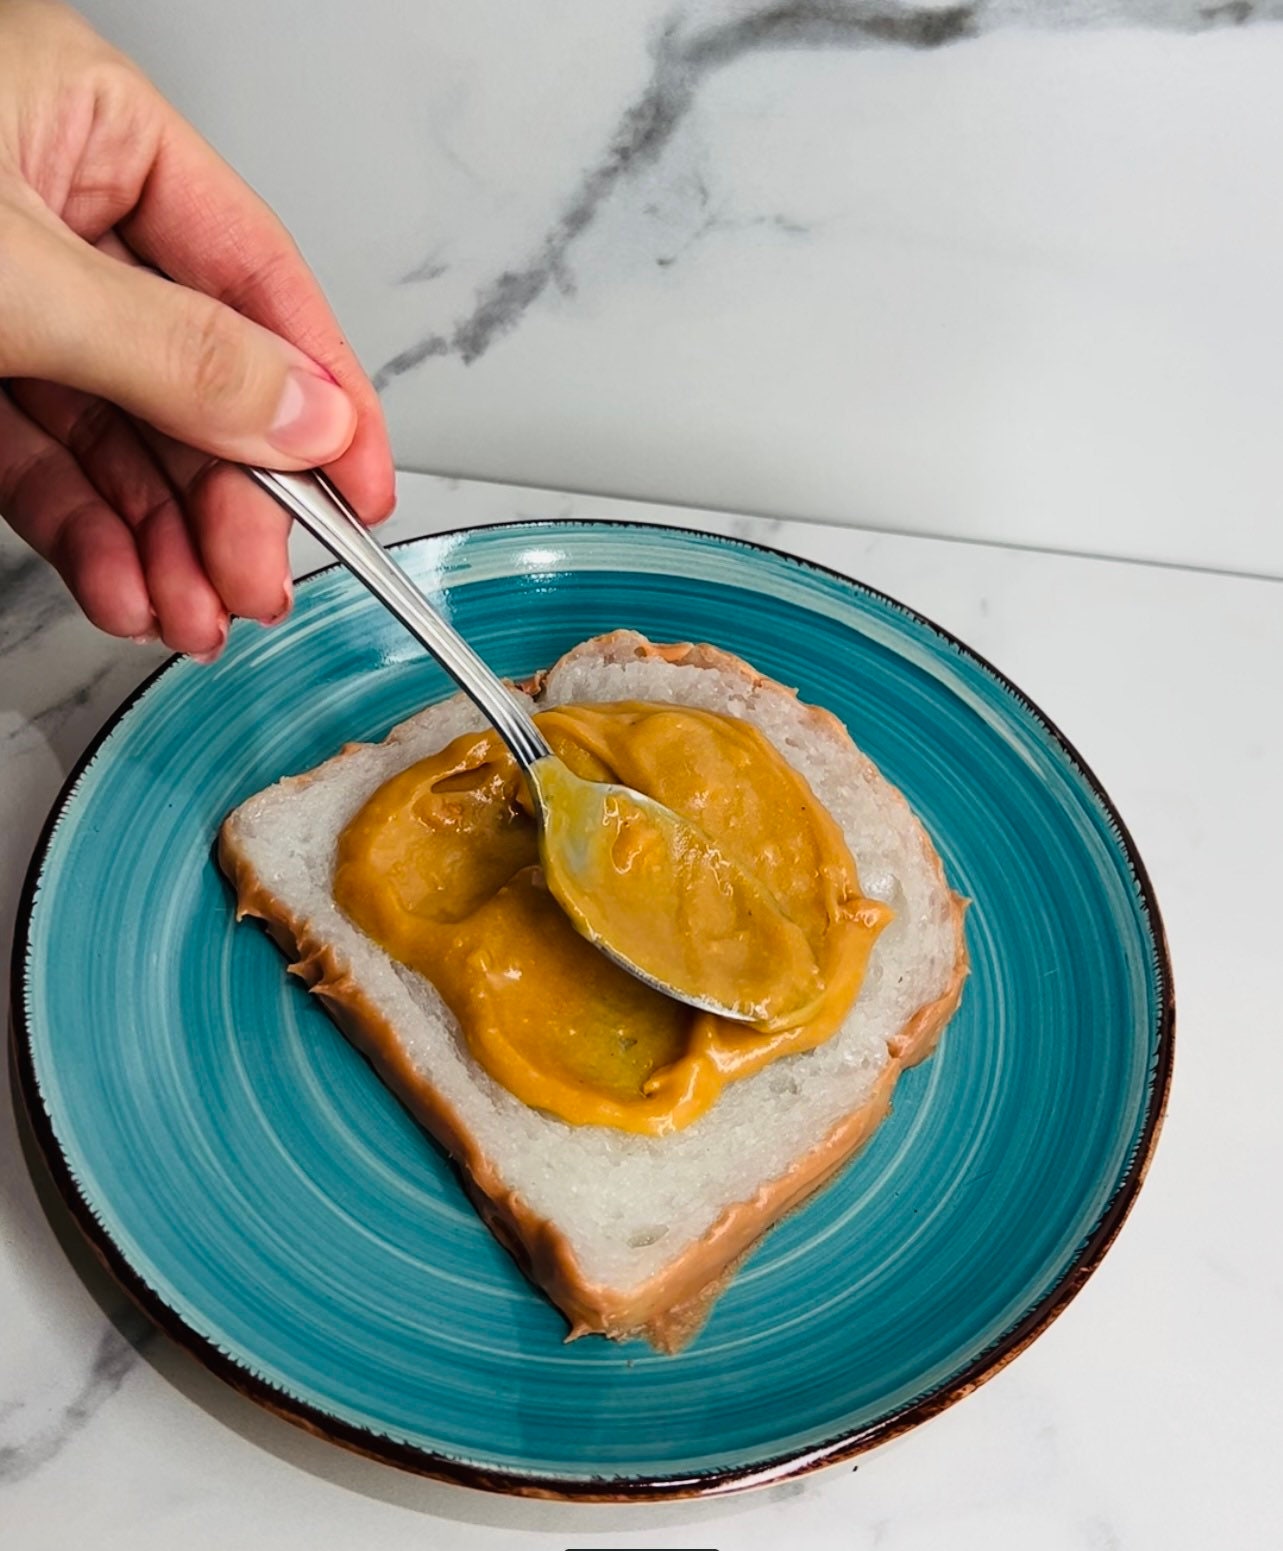 DIY Peanut Butter, Banana, Nutella Sandwich